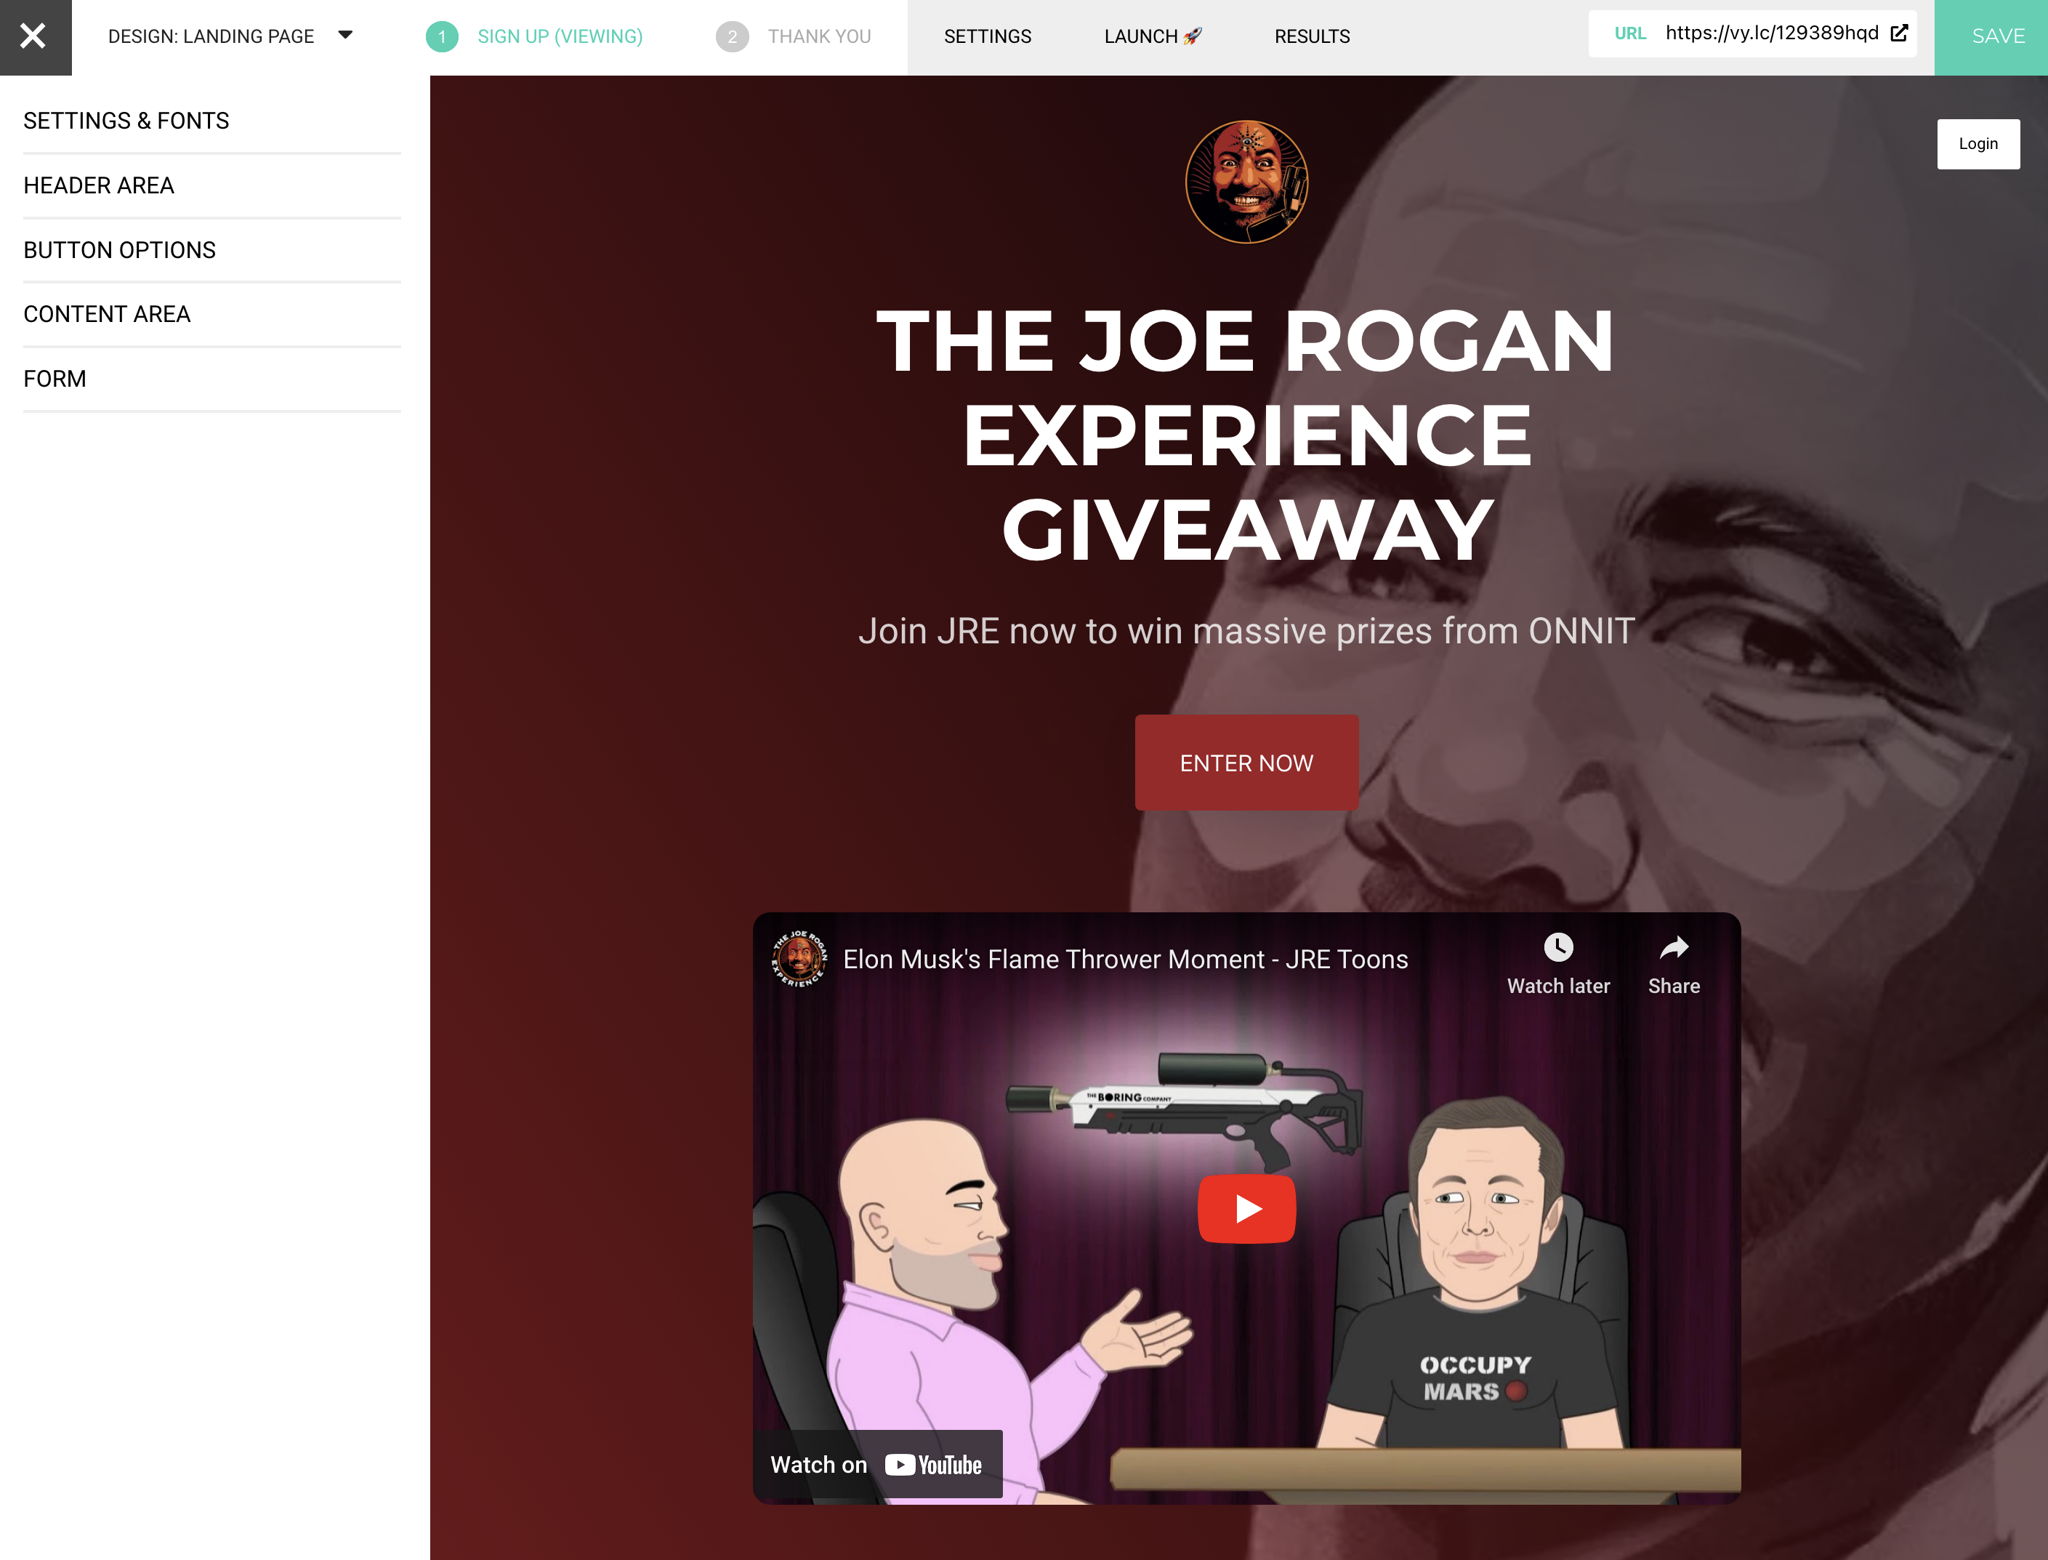 Joe Rogan Giveaway Demo with VYPER